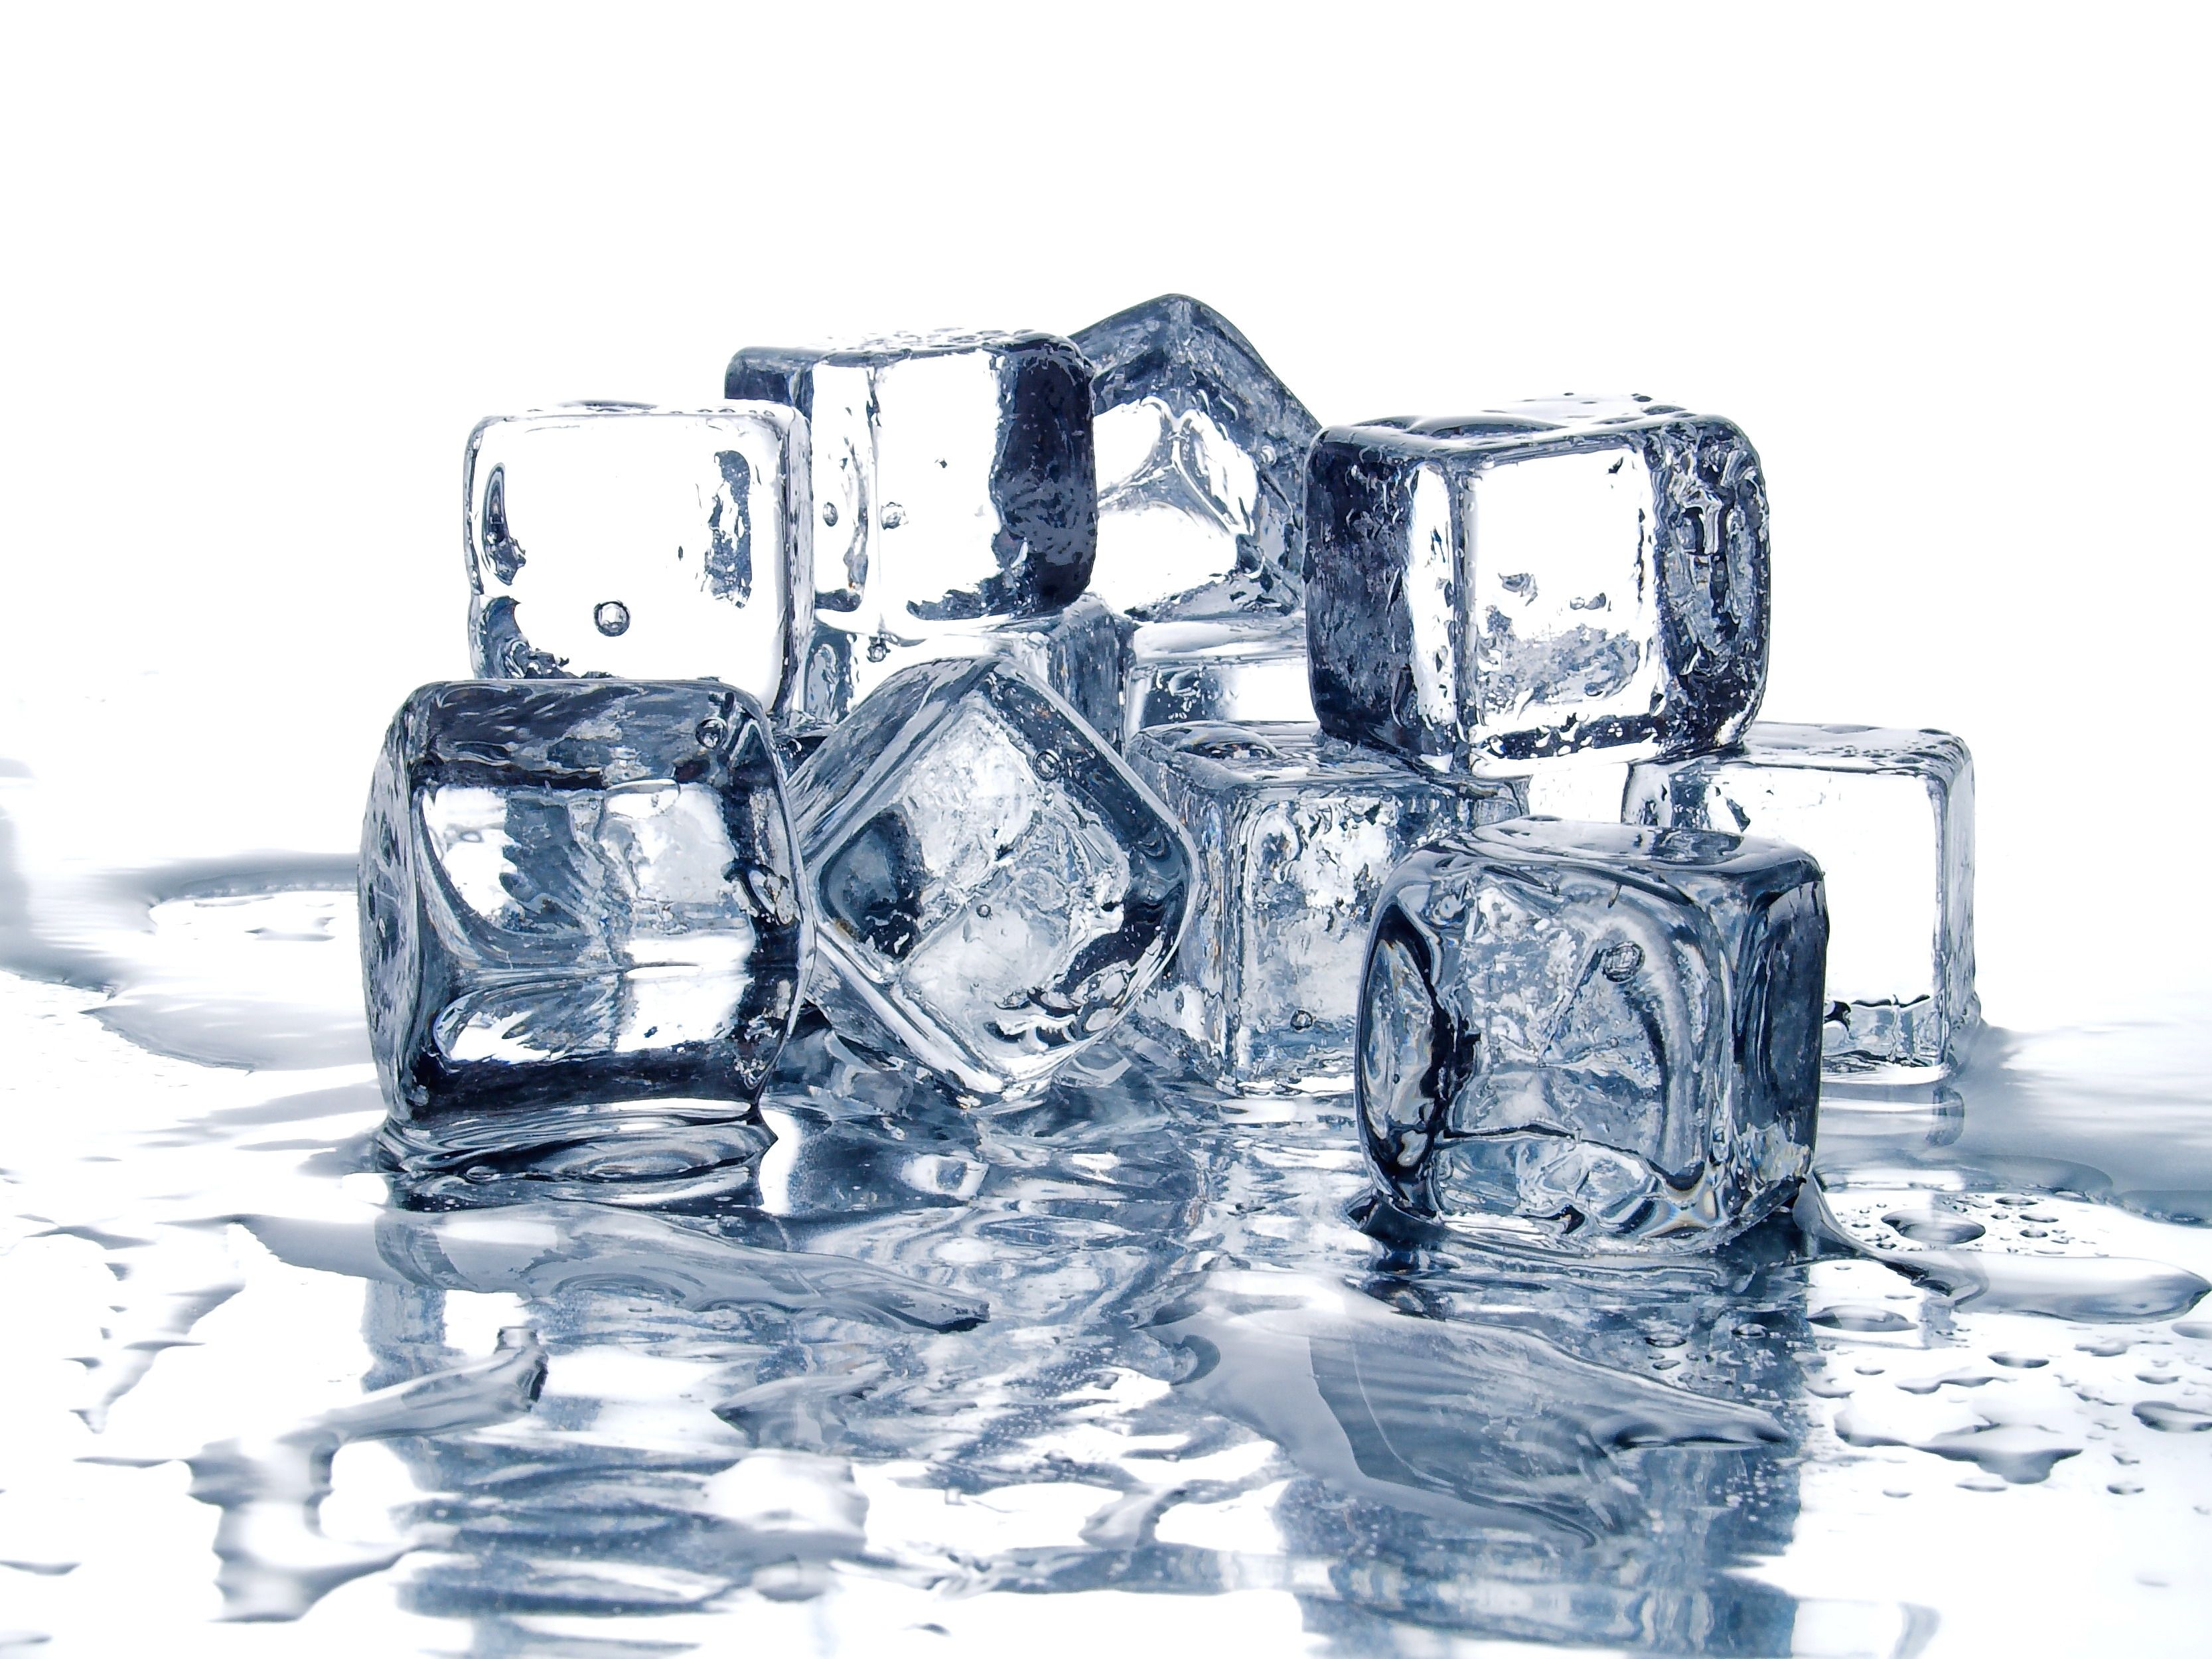 https://www.65ymas.com/uploads/s1/11/53/70/bigstock-melting-ice-cubes-821192.jpeg